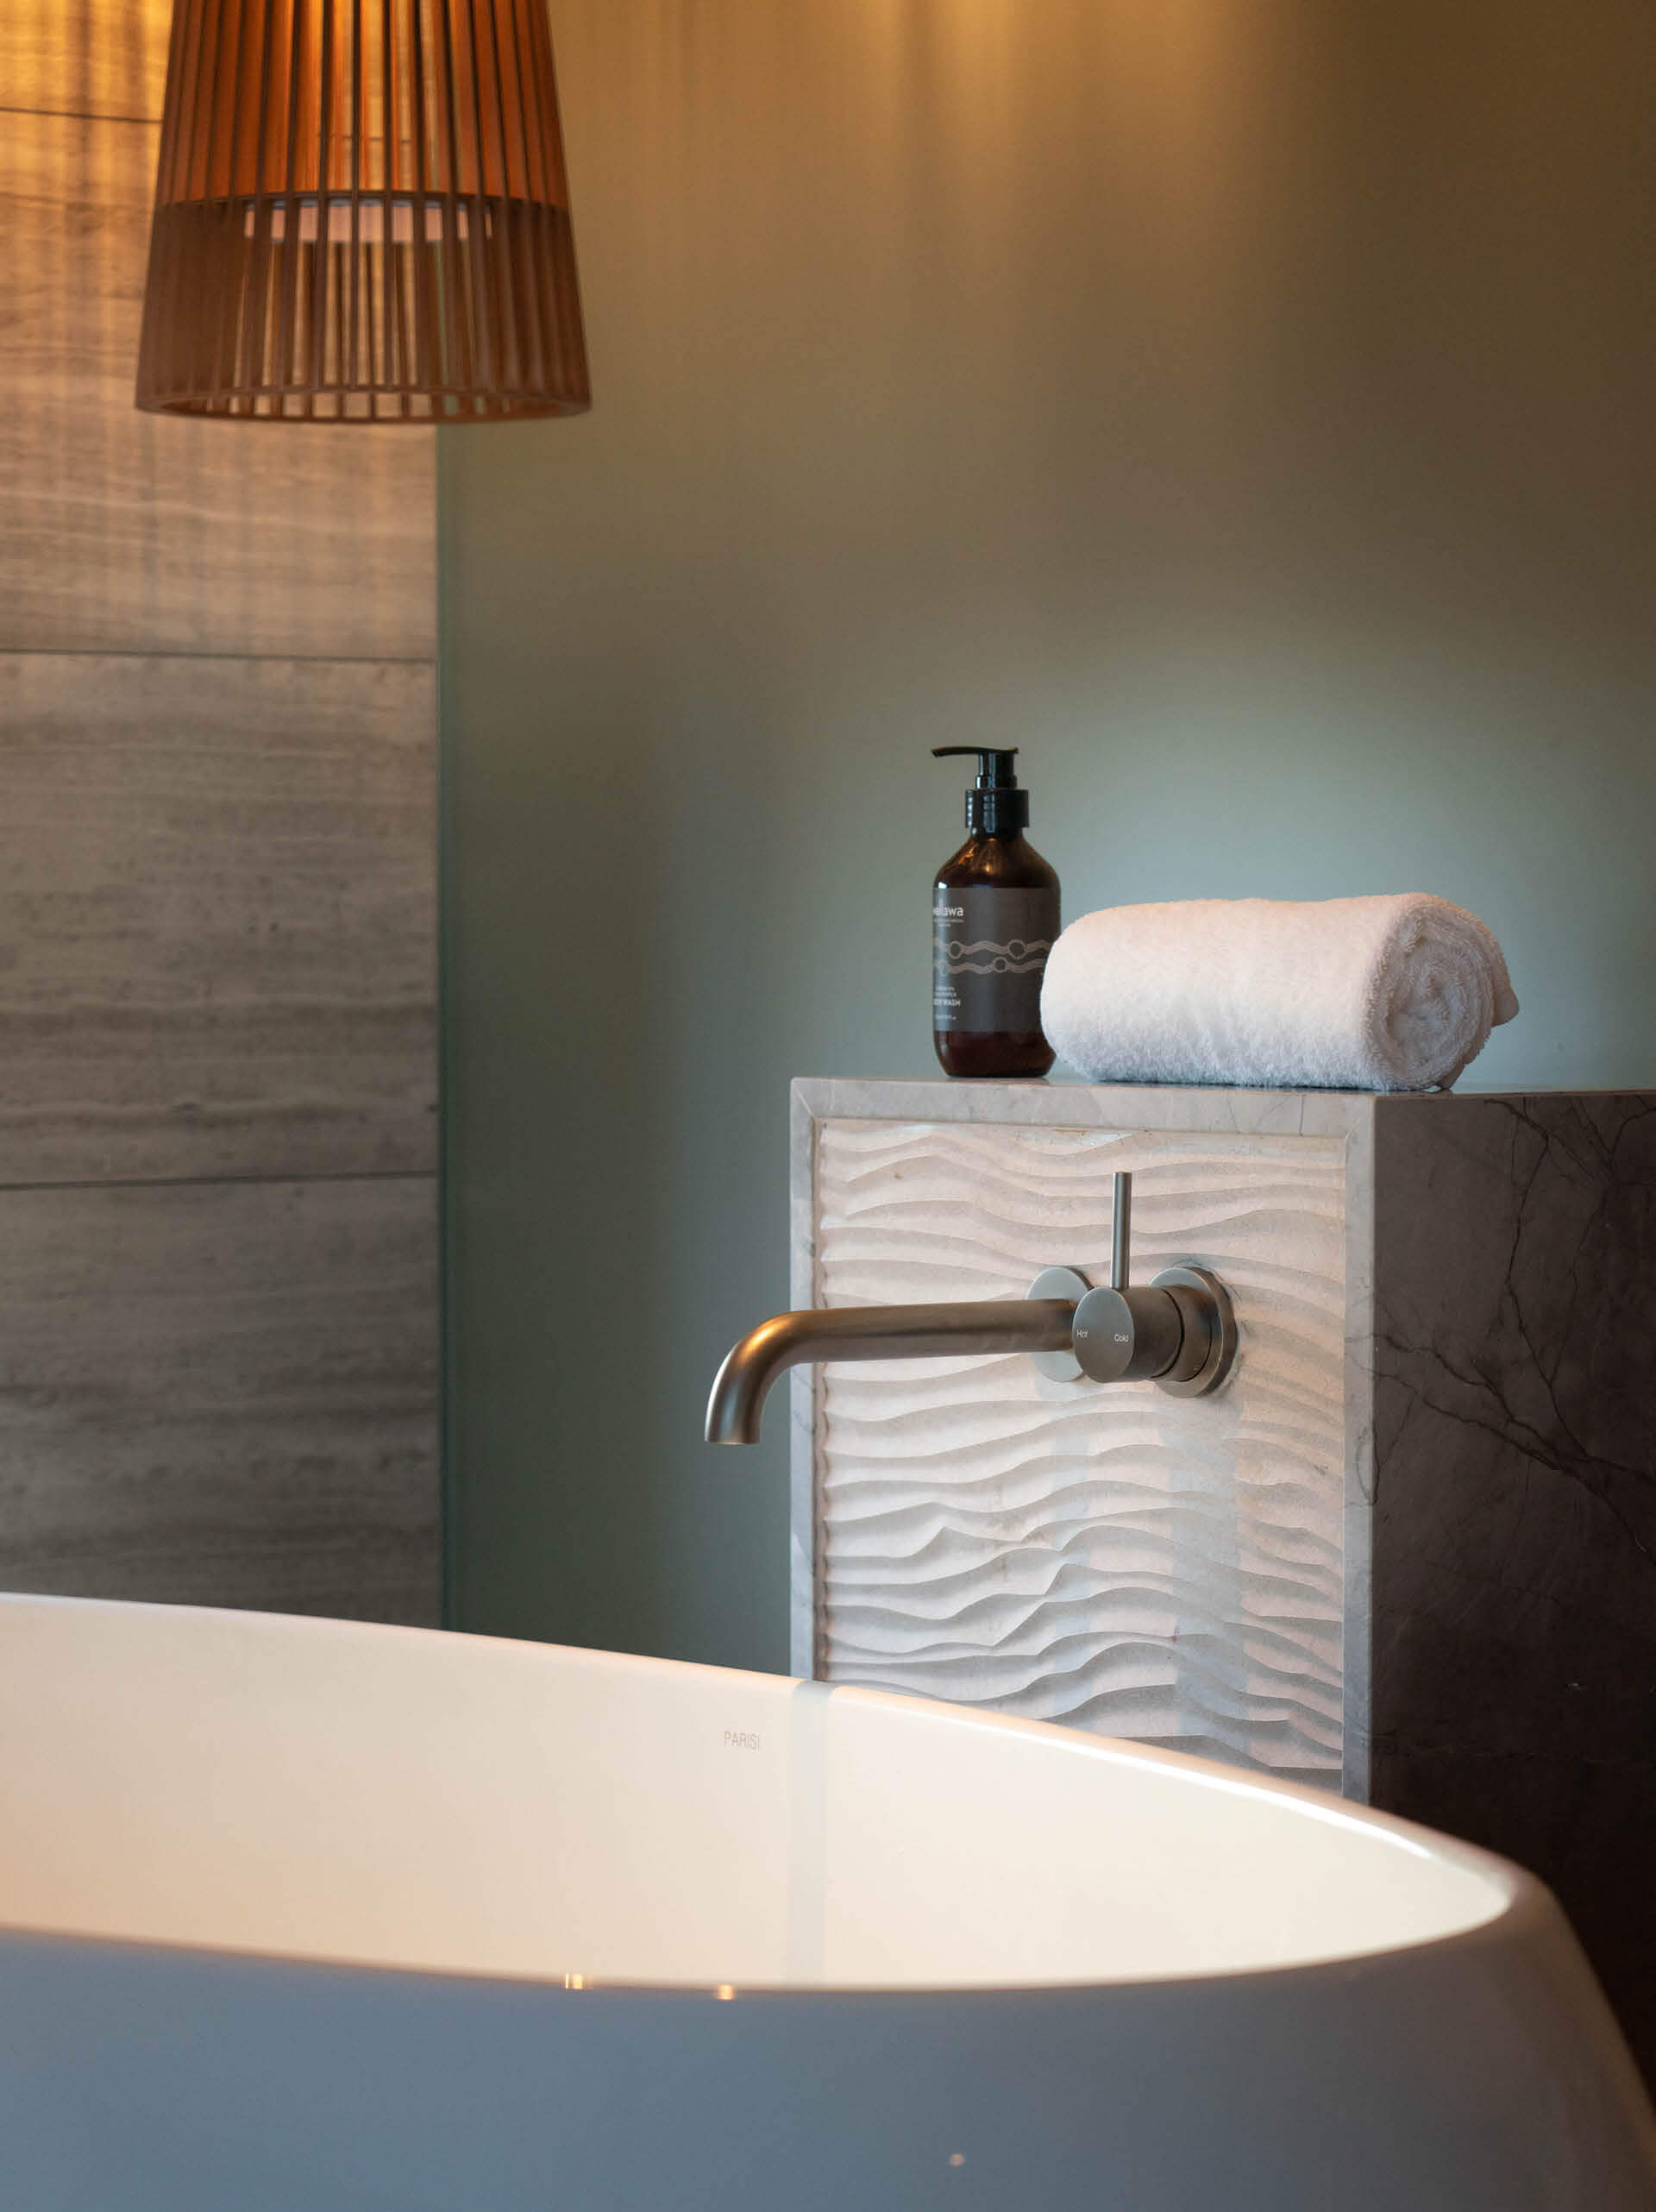 27 accommodation interior detail of bath tap complimentary toiletries at taronga wildlife retreat sydney taylor construction hospitality